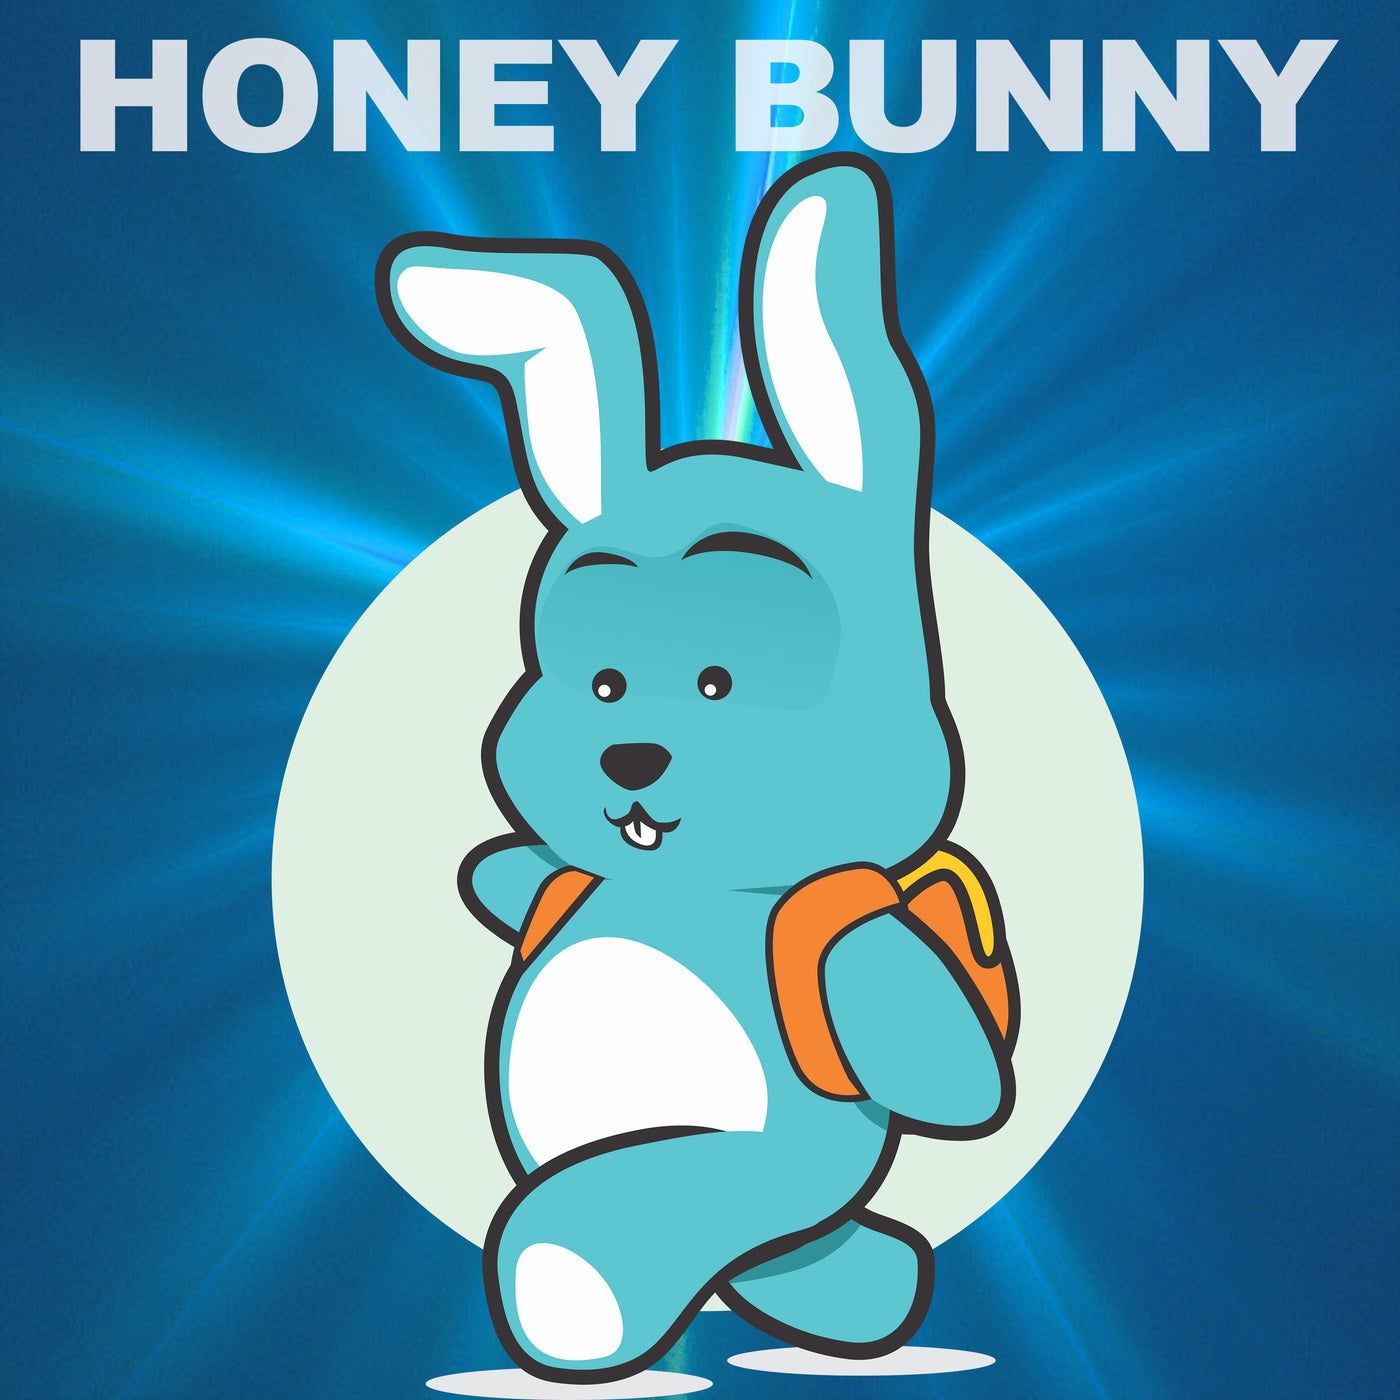 Honey Bunny Music & Downloads on Beatport